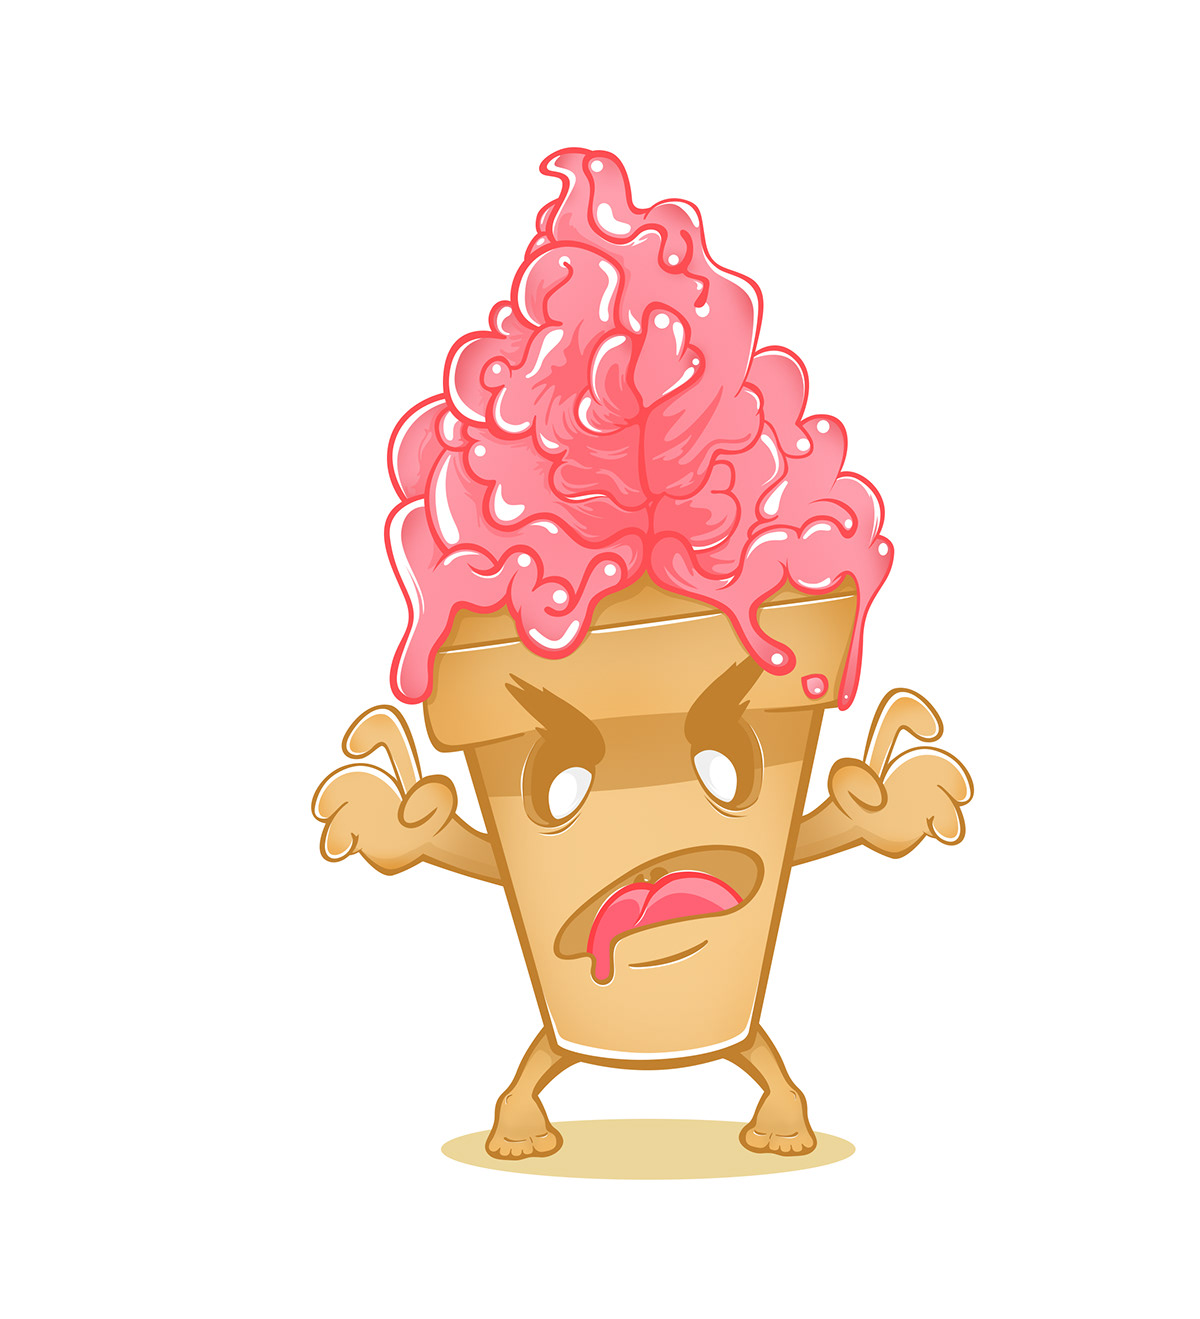 Fun zombie sundae ice cream brain gore vector Character mcdo cone strawberry cream pink brown allen